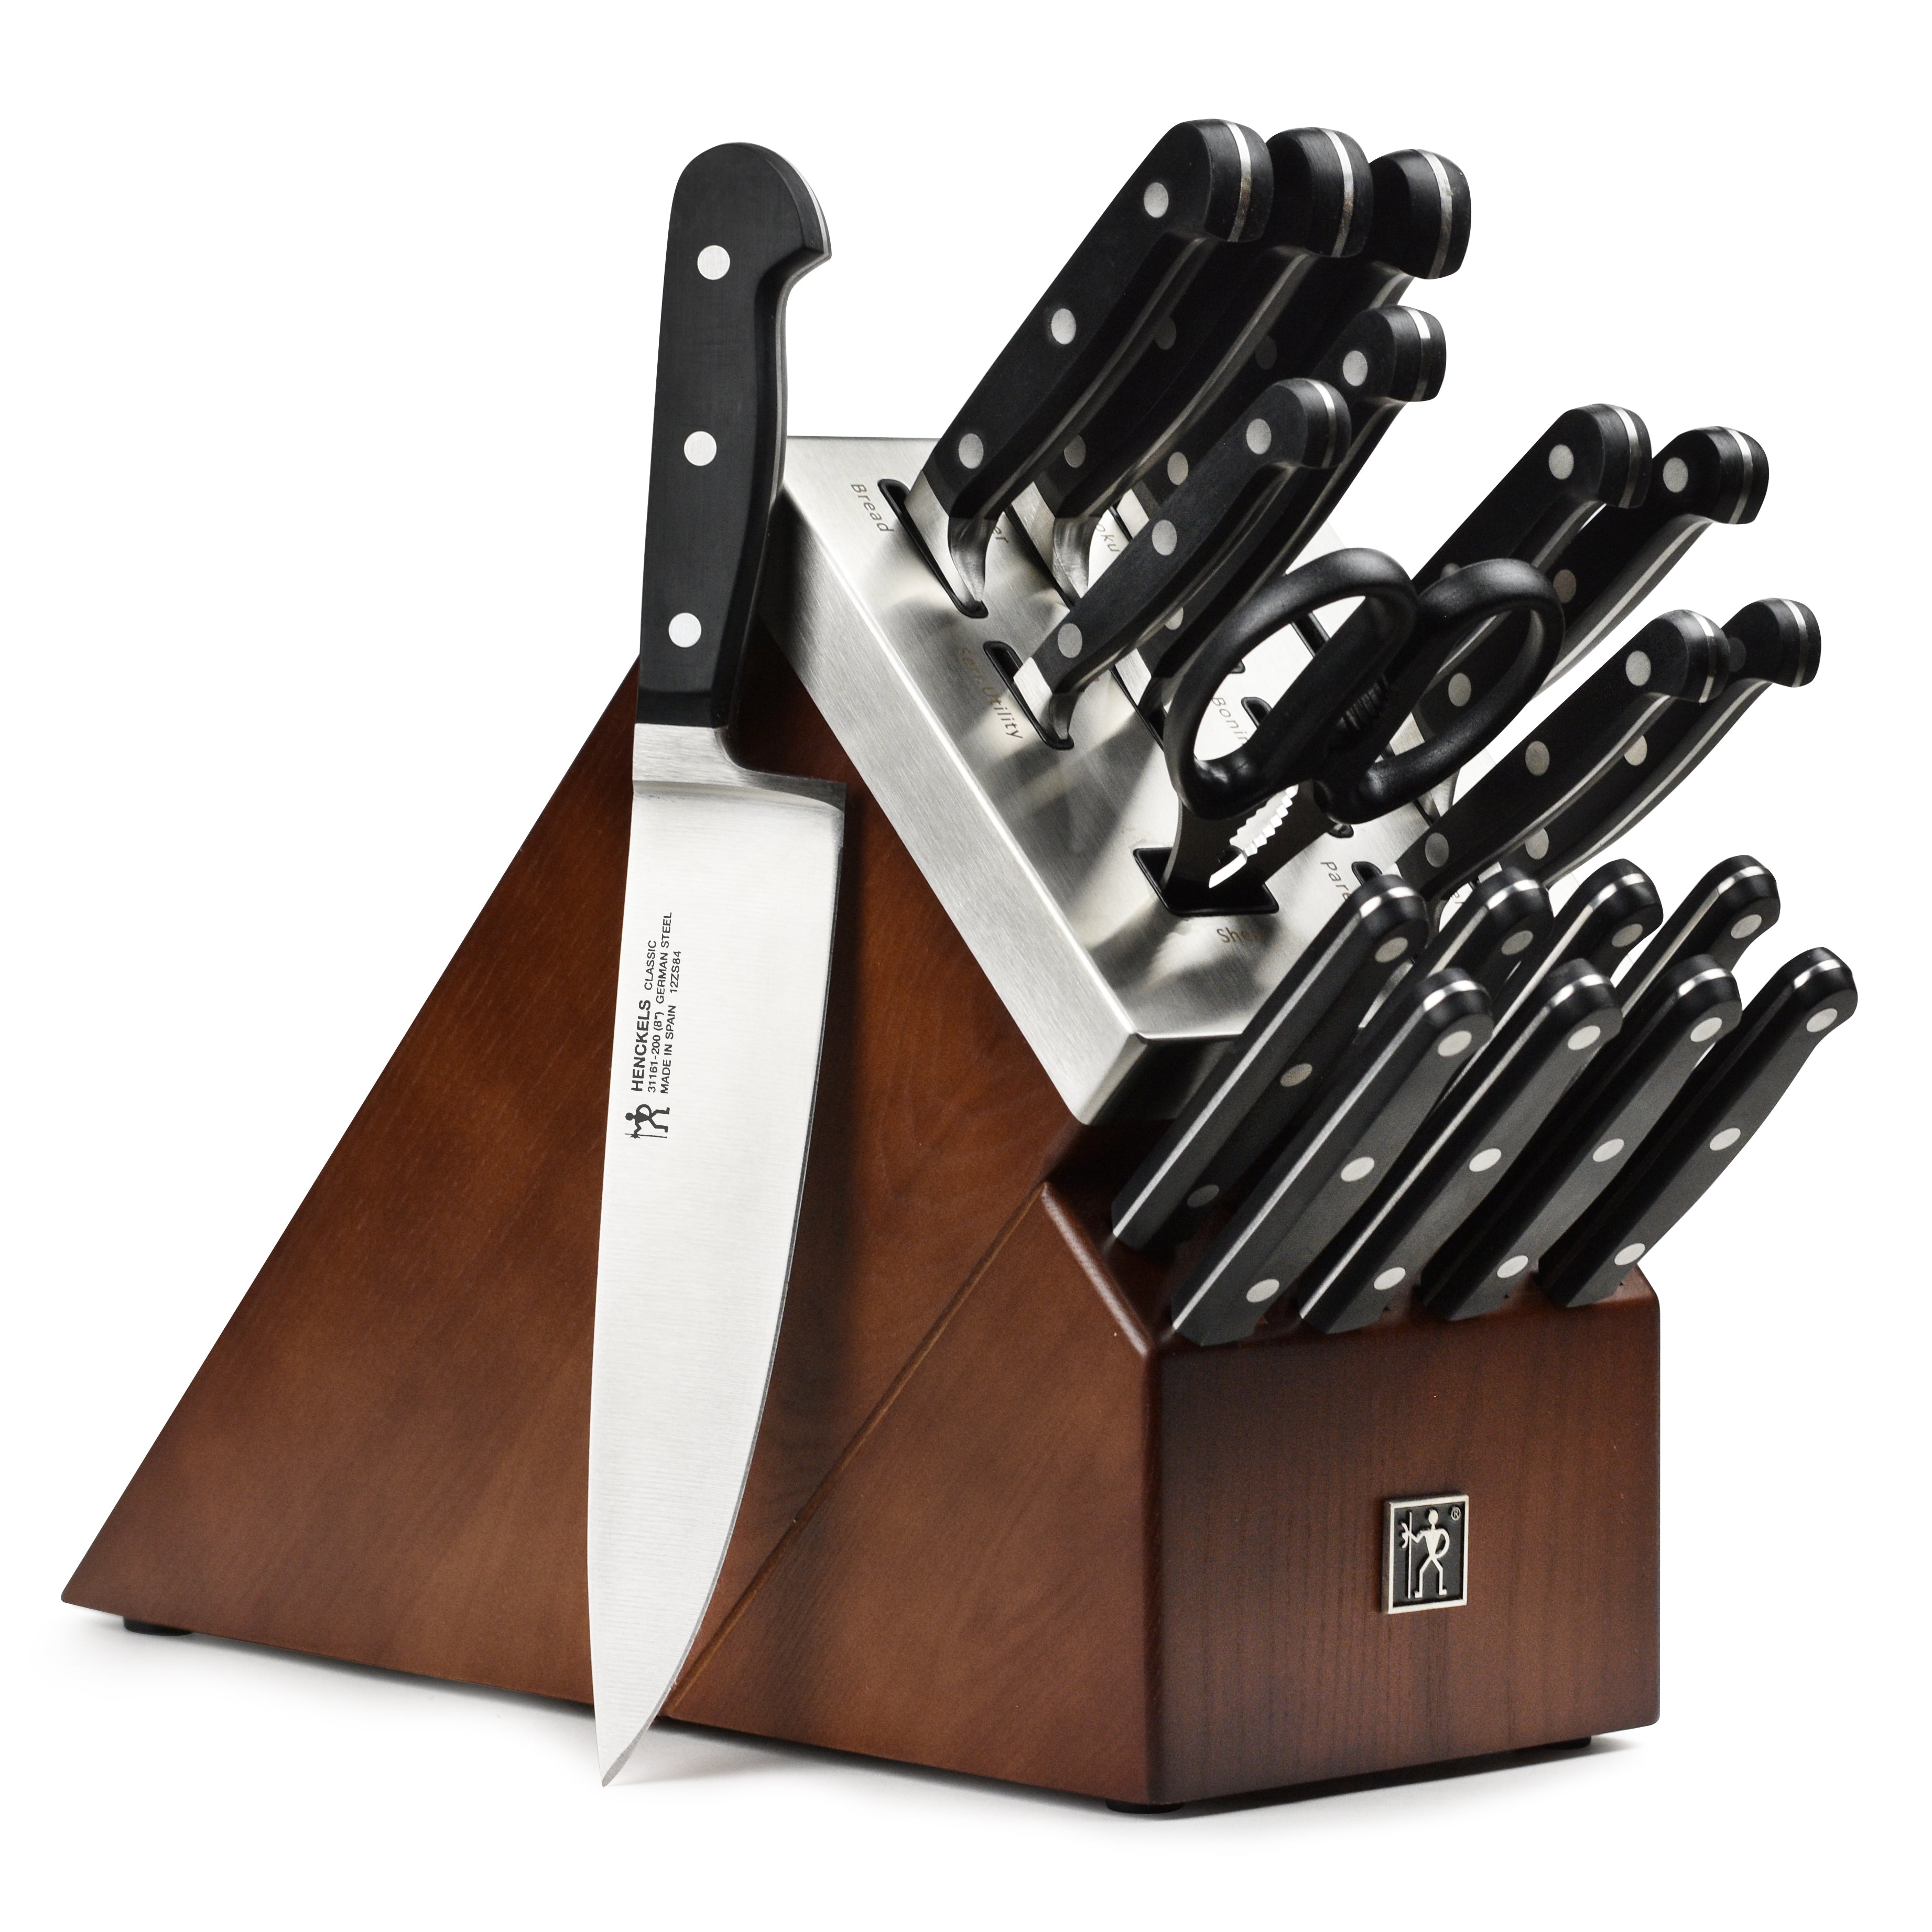 Classic Self-Sharpening 15-Piece Cutlery Set